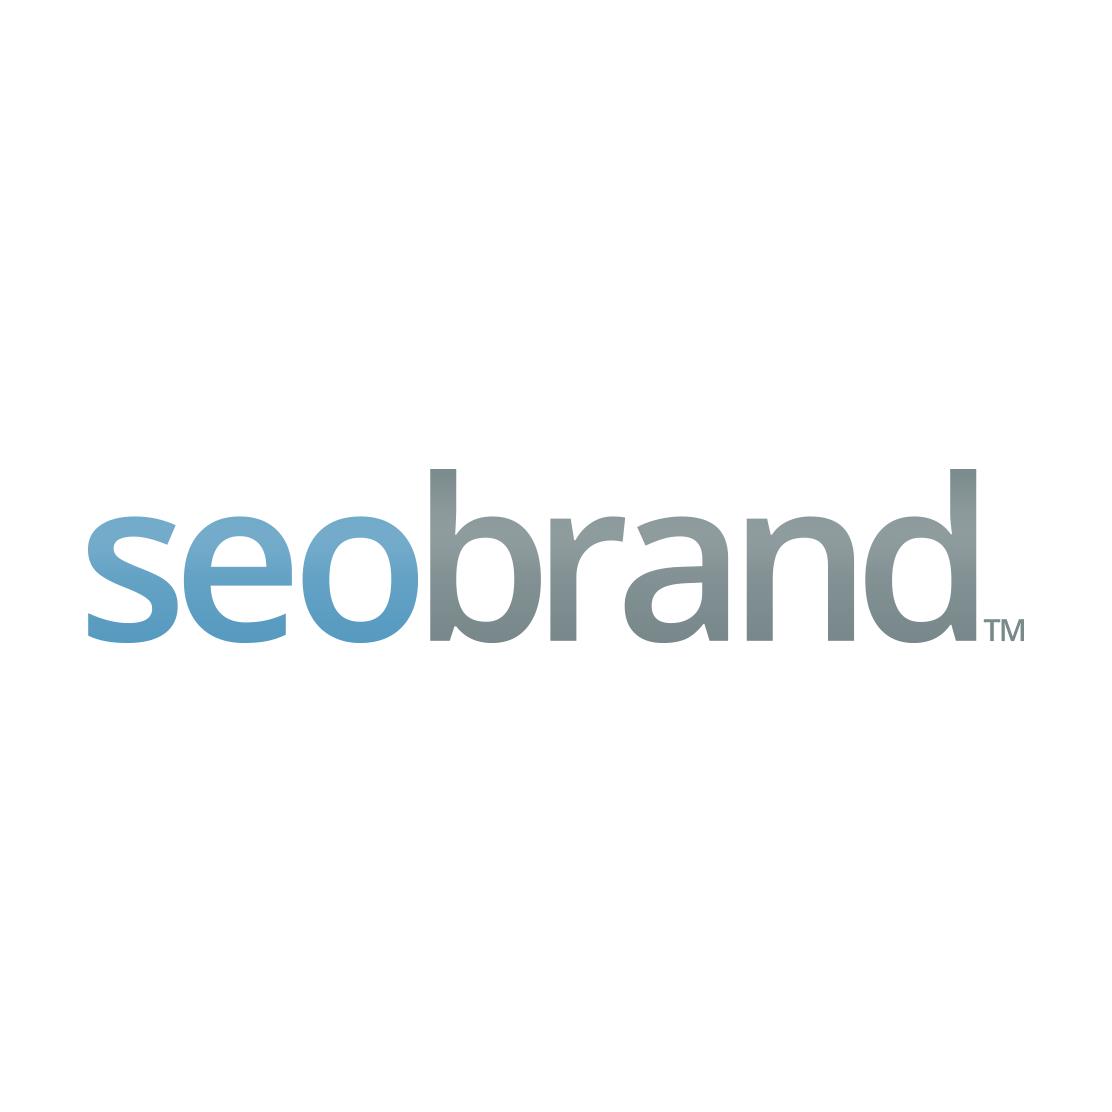 Best Philly SEO Agency Logo: SEO Brand